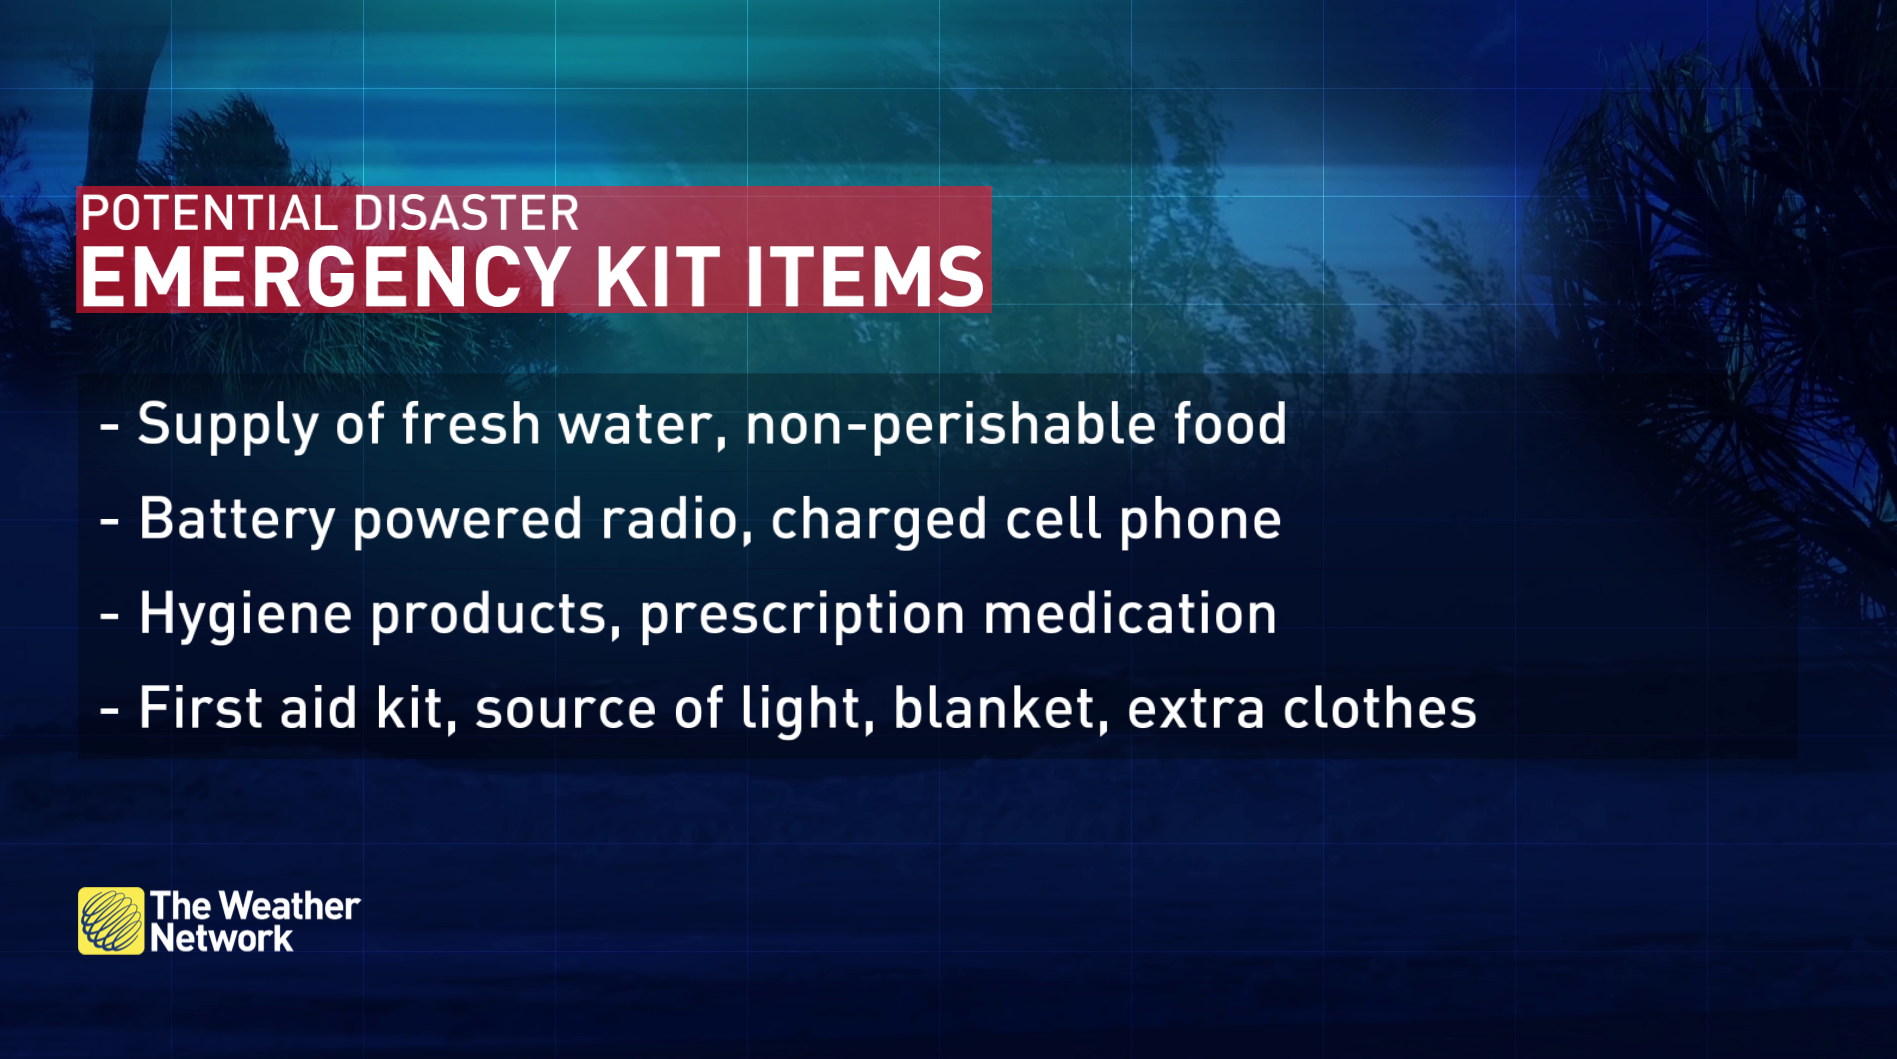 Emergency kit items - hurricane, wildfire, evacuations, safety, tips